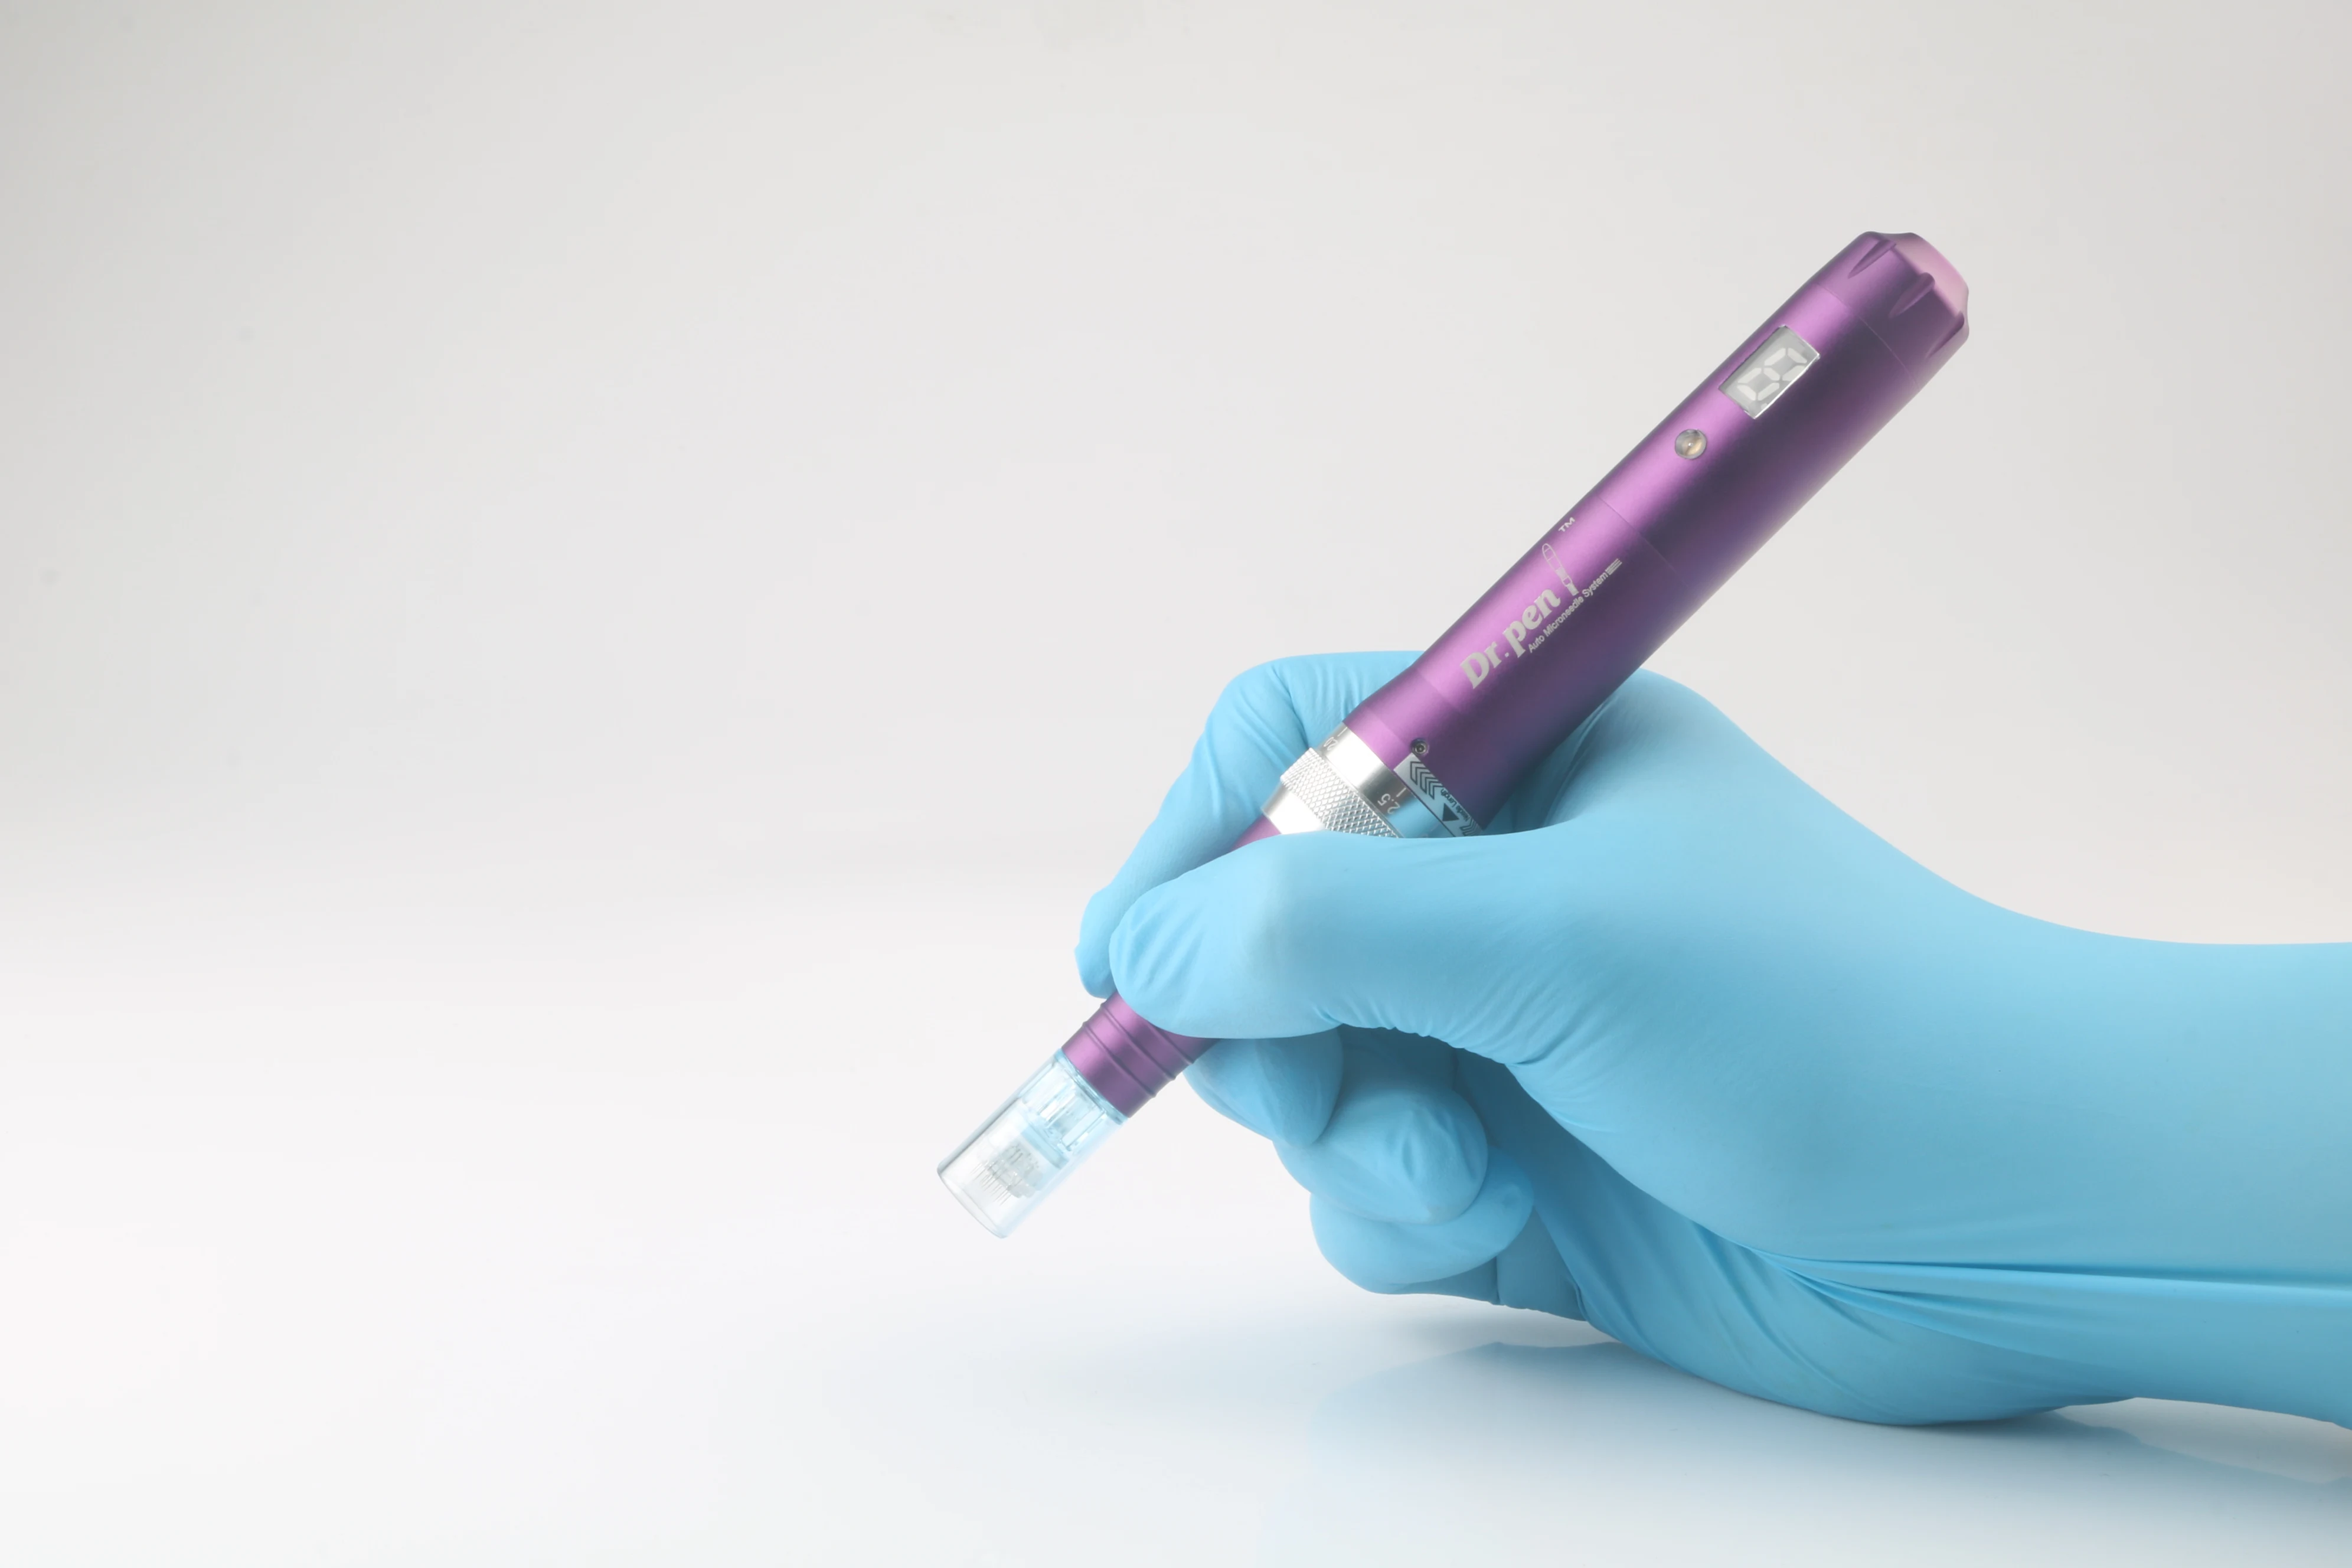 Rechargeable microneedling pen battery derma pen for skin rejuvenation Dr. pen X5